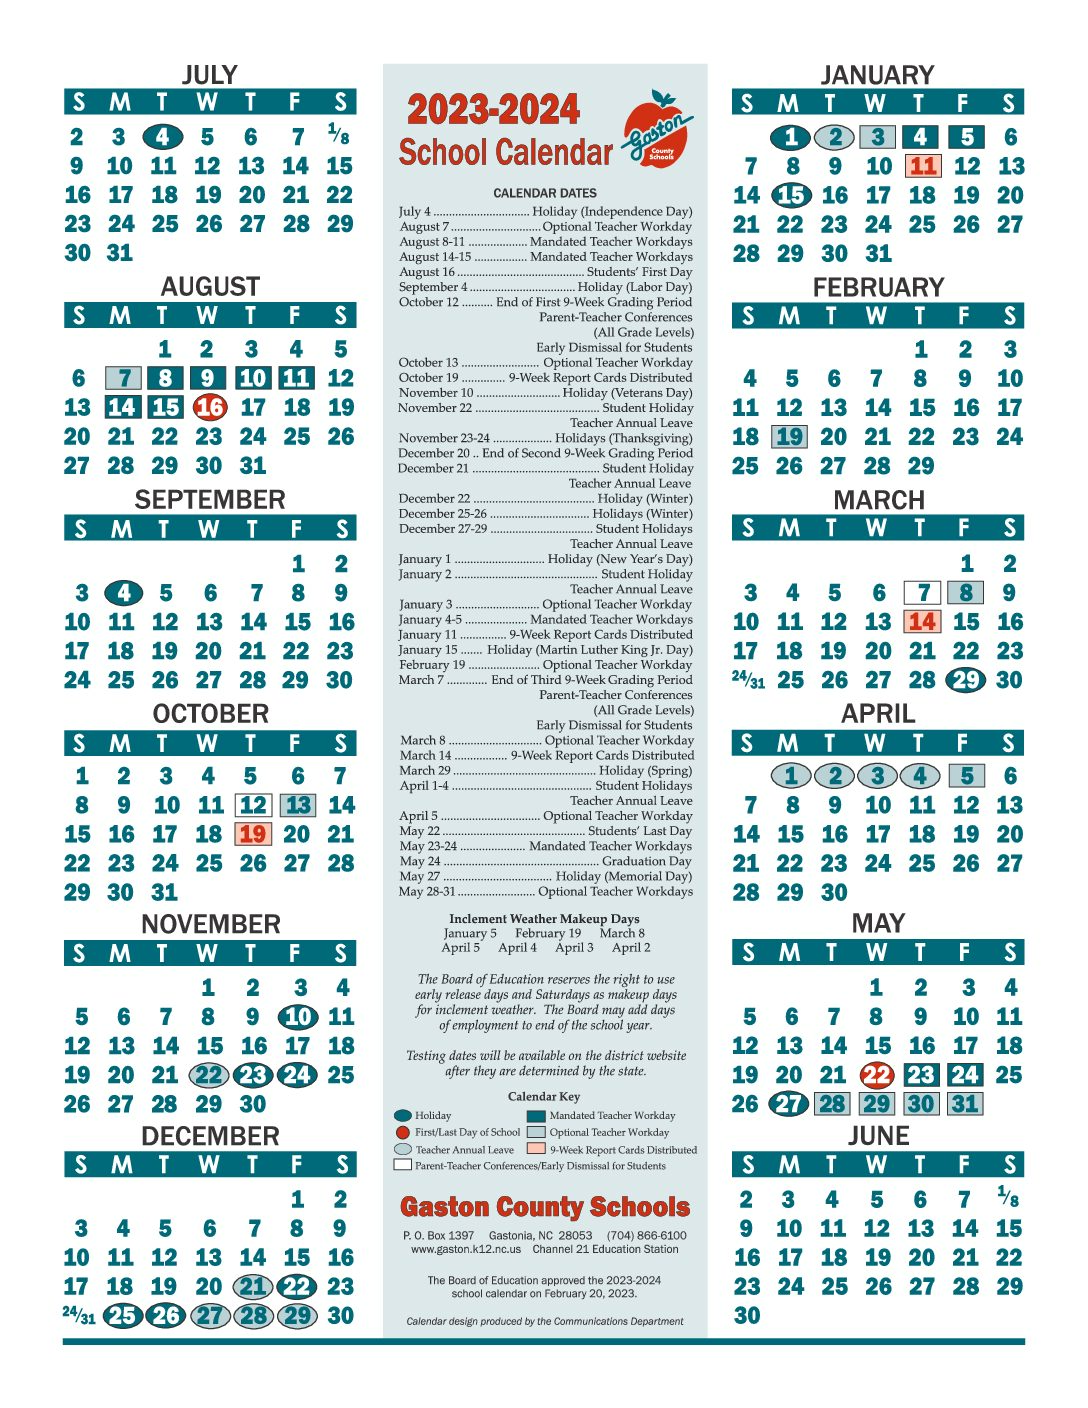 Gaston County Schools Calendar 20232024 in PDF